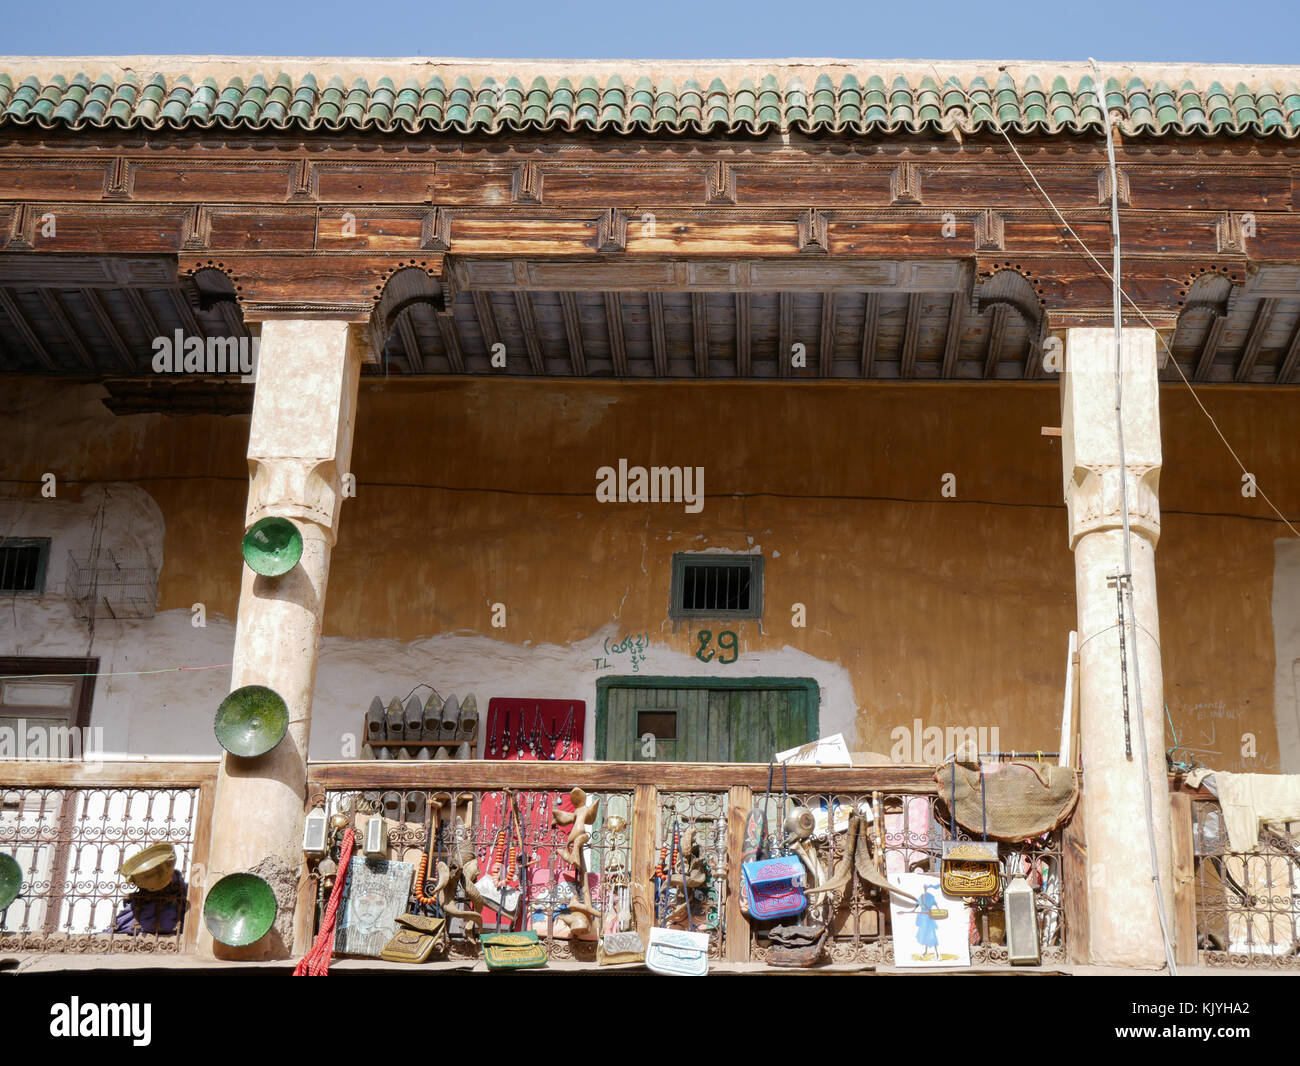 Trading stall on a balcony, Marrakesh Stock Photo